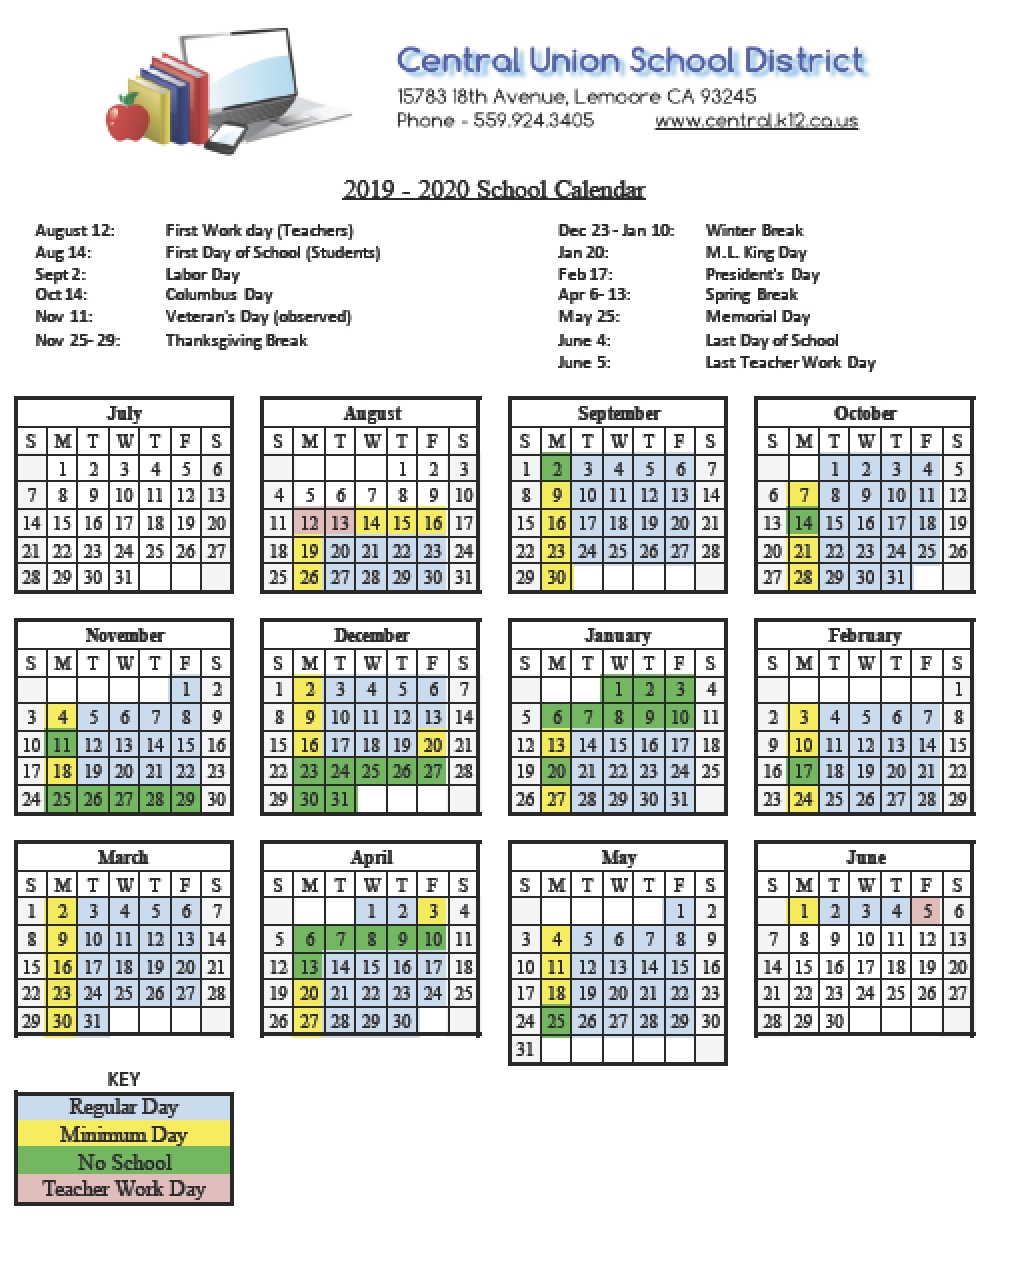 District Calendar 2019-20 - Central Union School District Incredible Cusd 4 School Calendar